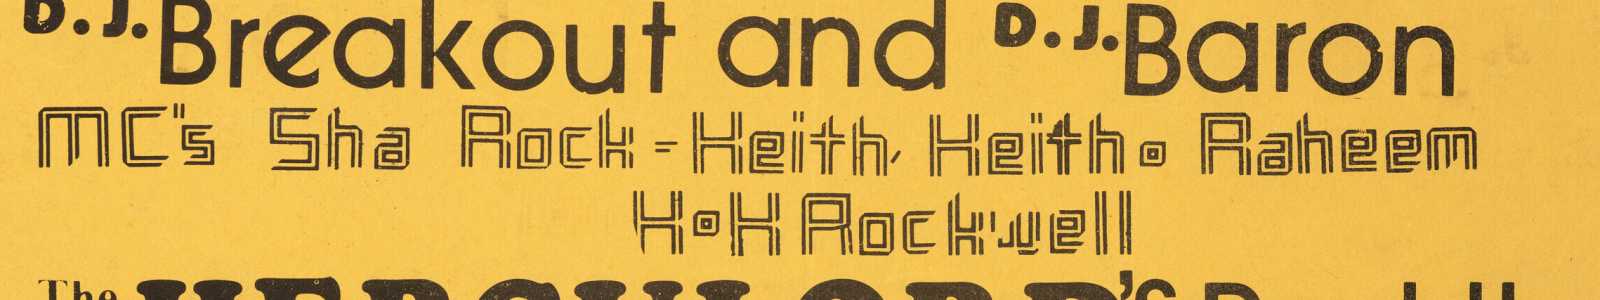 DJ Kool Herc & The Birth of Hip Hop